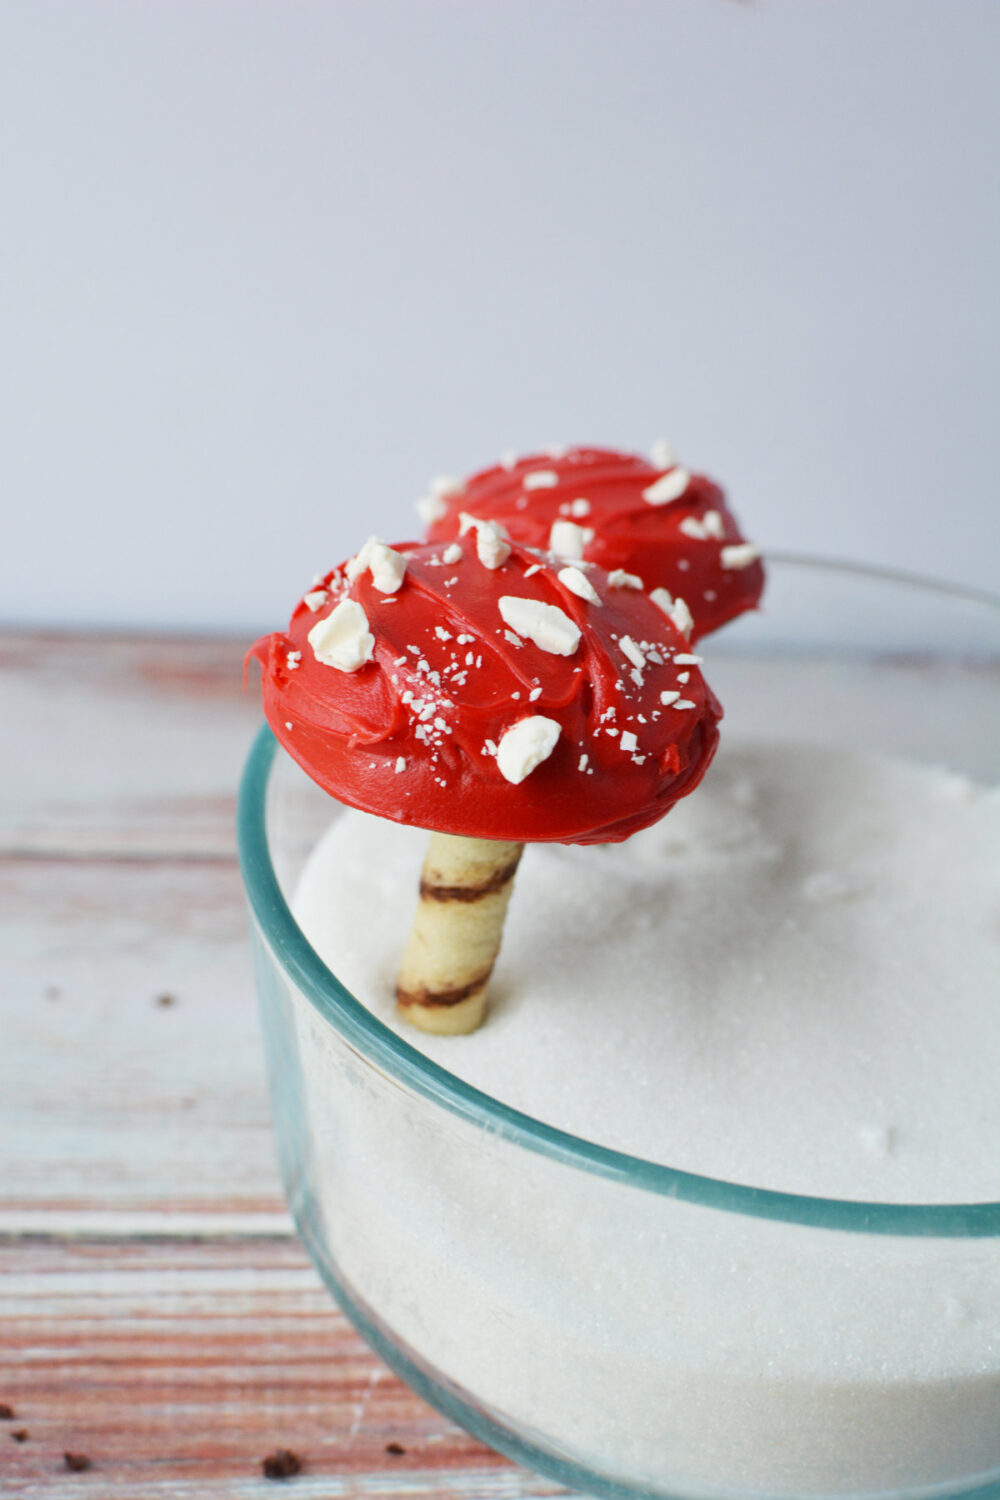 Decorating edible candy mushrooms